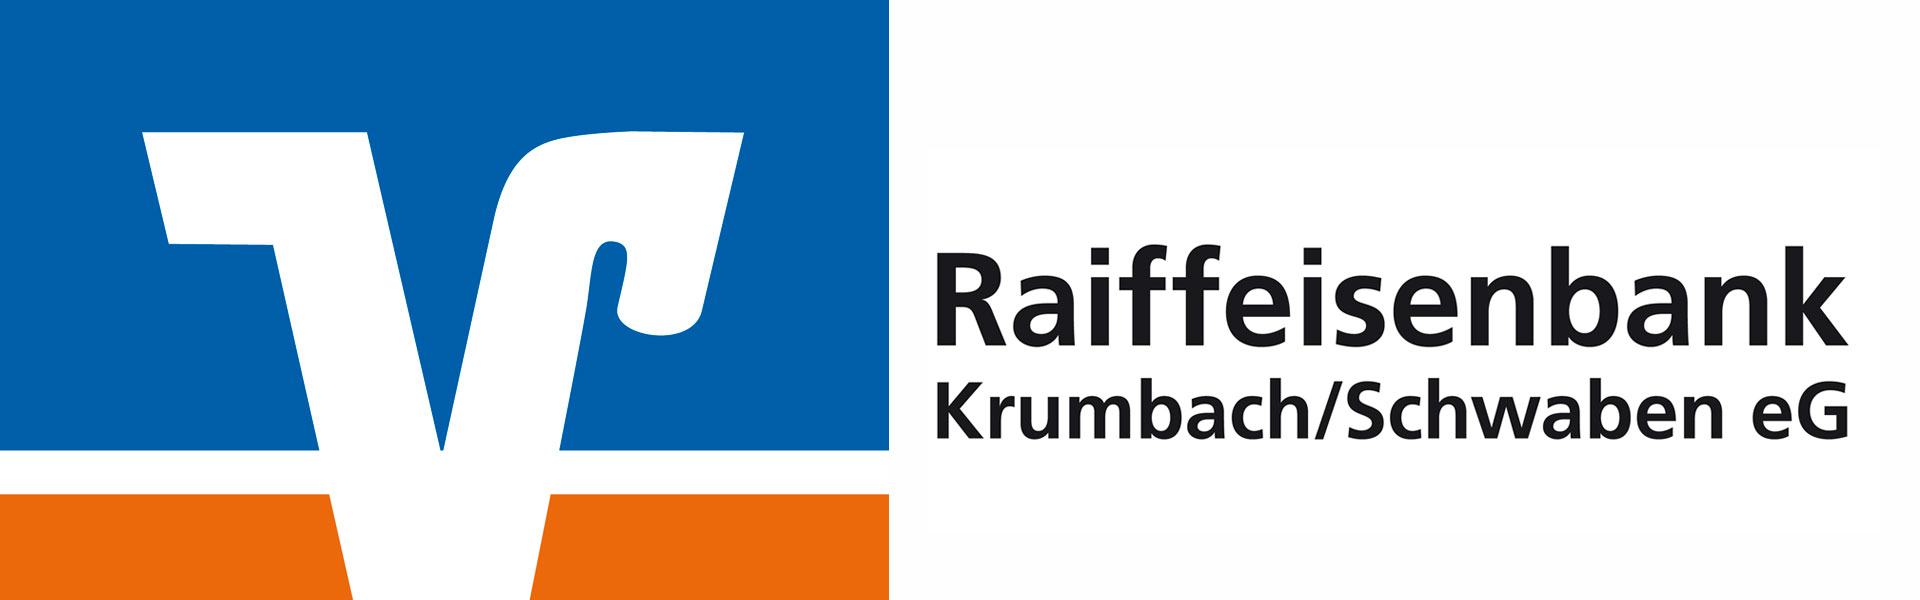 Hauptsponsor Raiffeisenbank Krumbach eG